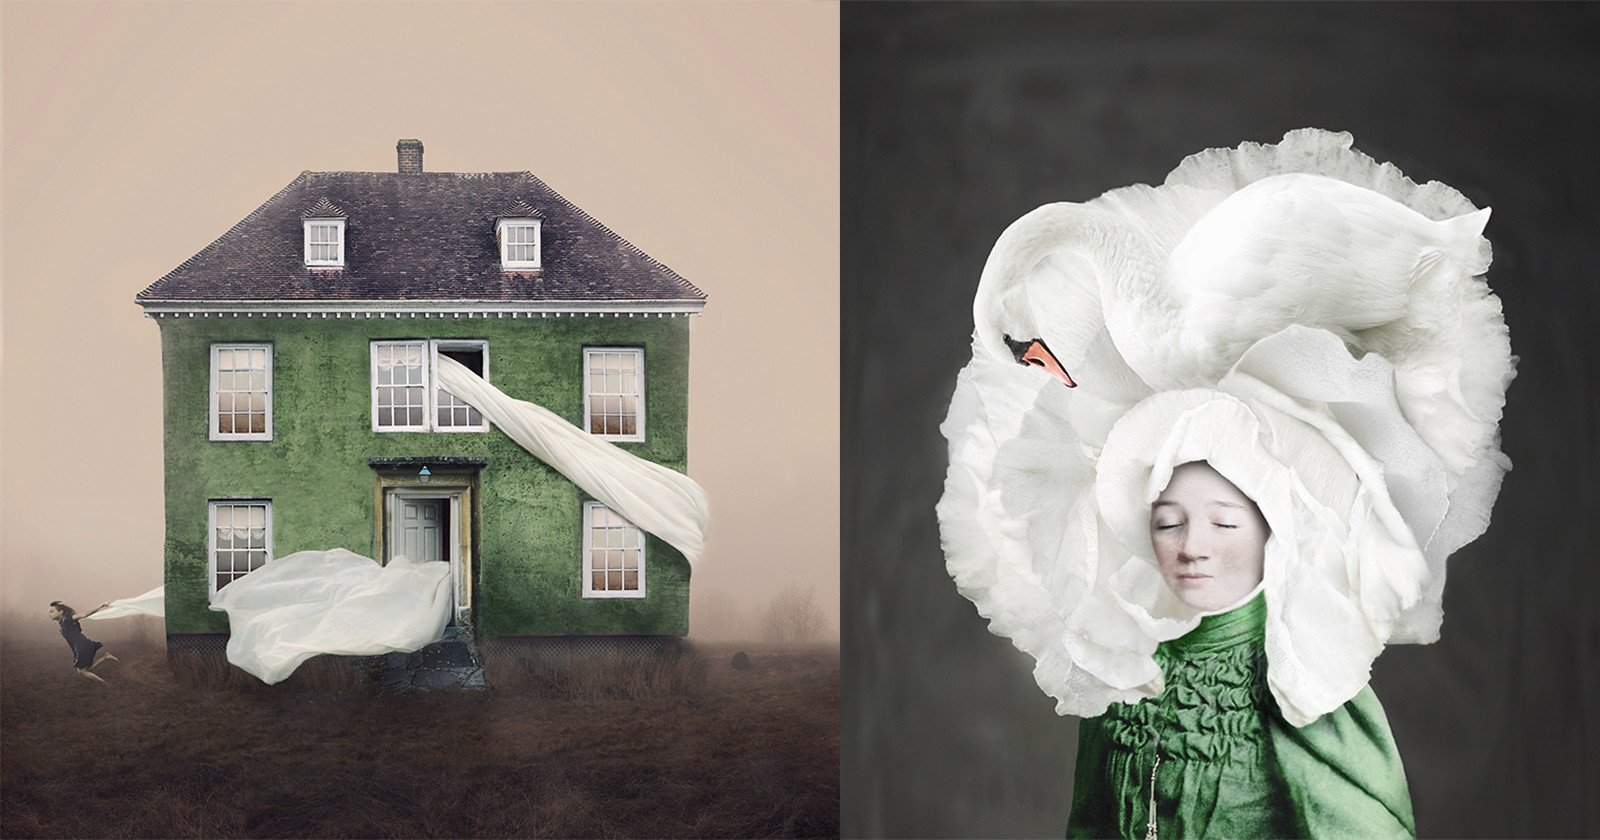  photographer conceptual series looks like surrealist paintings 